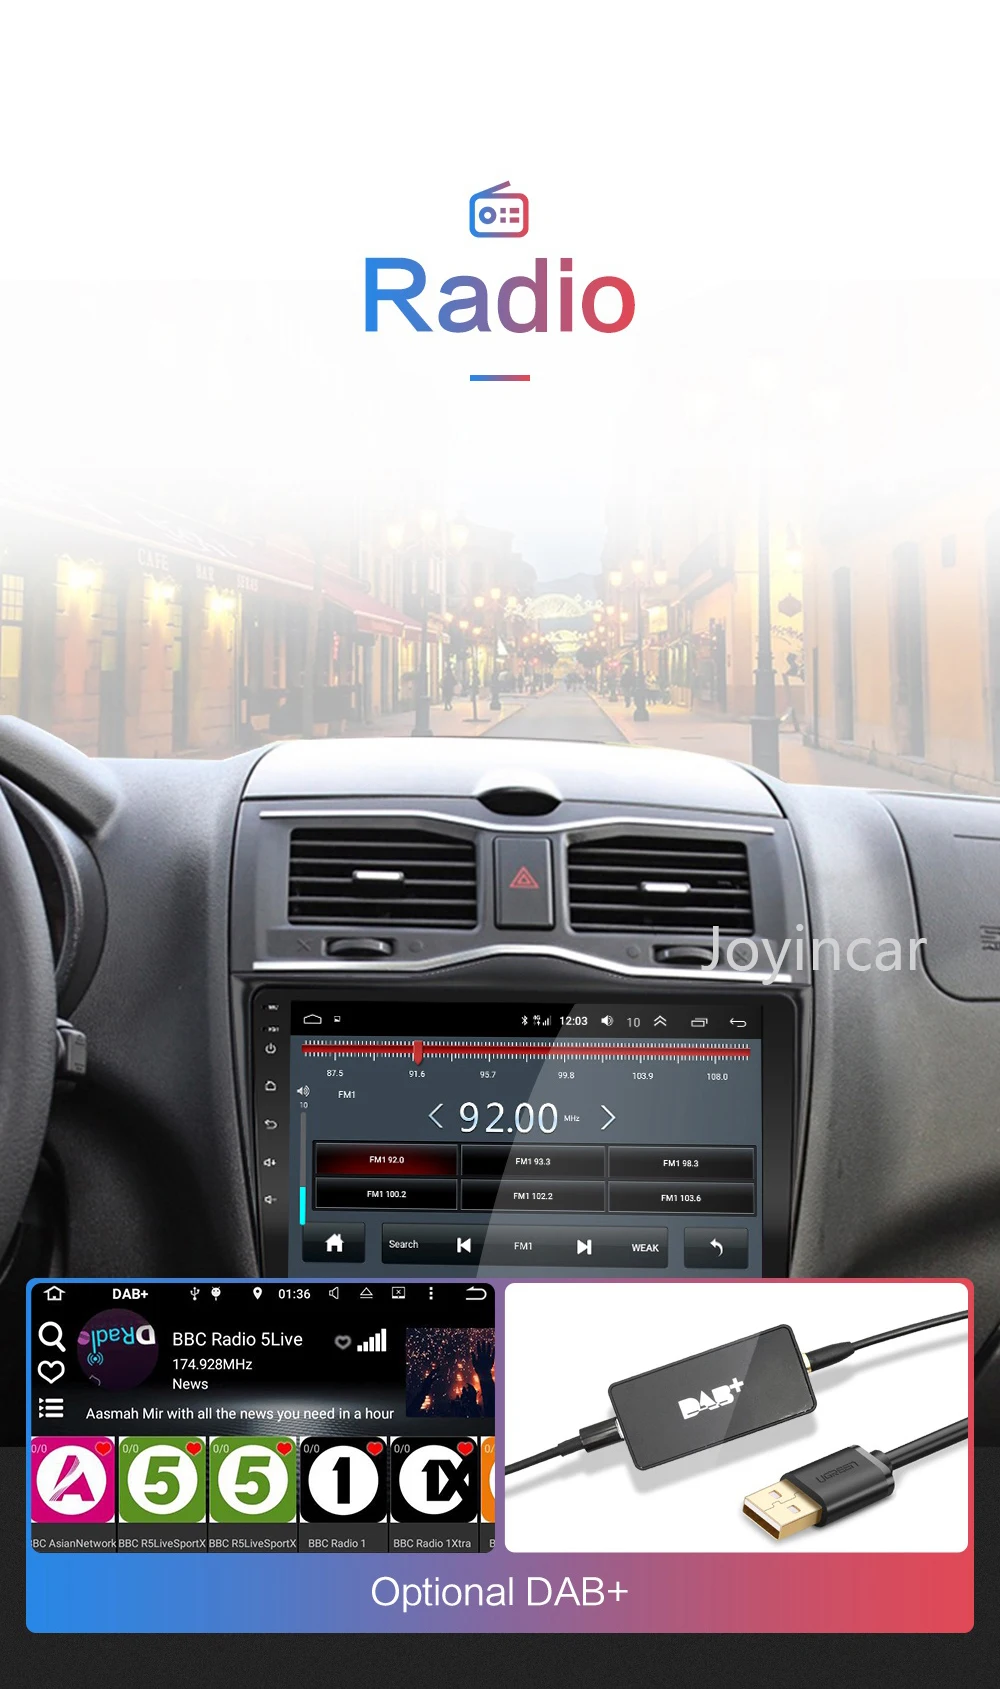 " 2G+ 32G 2 Din Android 9,1 Автомобиль Радио Мультимедийный видеоплеер для Toyota Hilux Yaris Vios Авто gps навигации Bluetooth, Wi-Fi